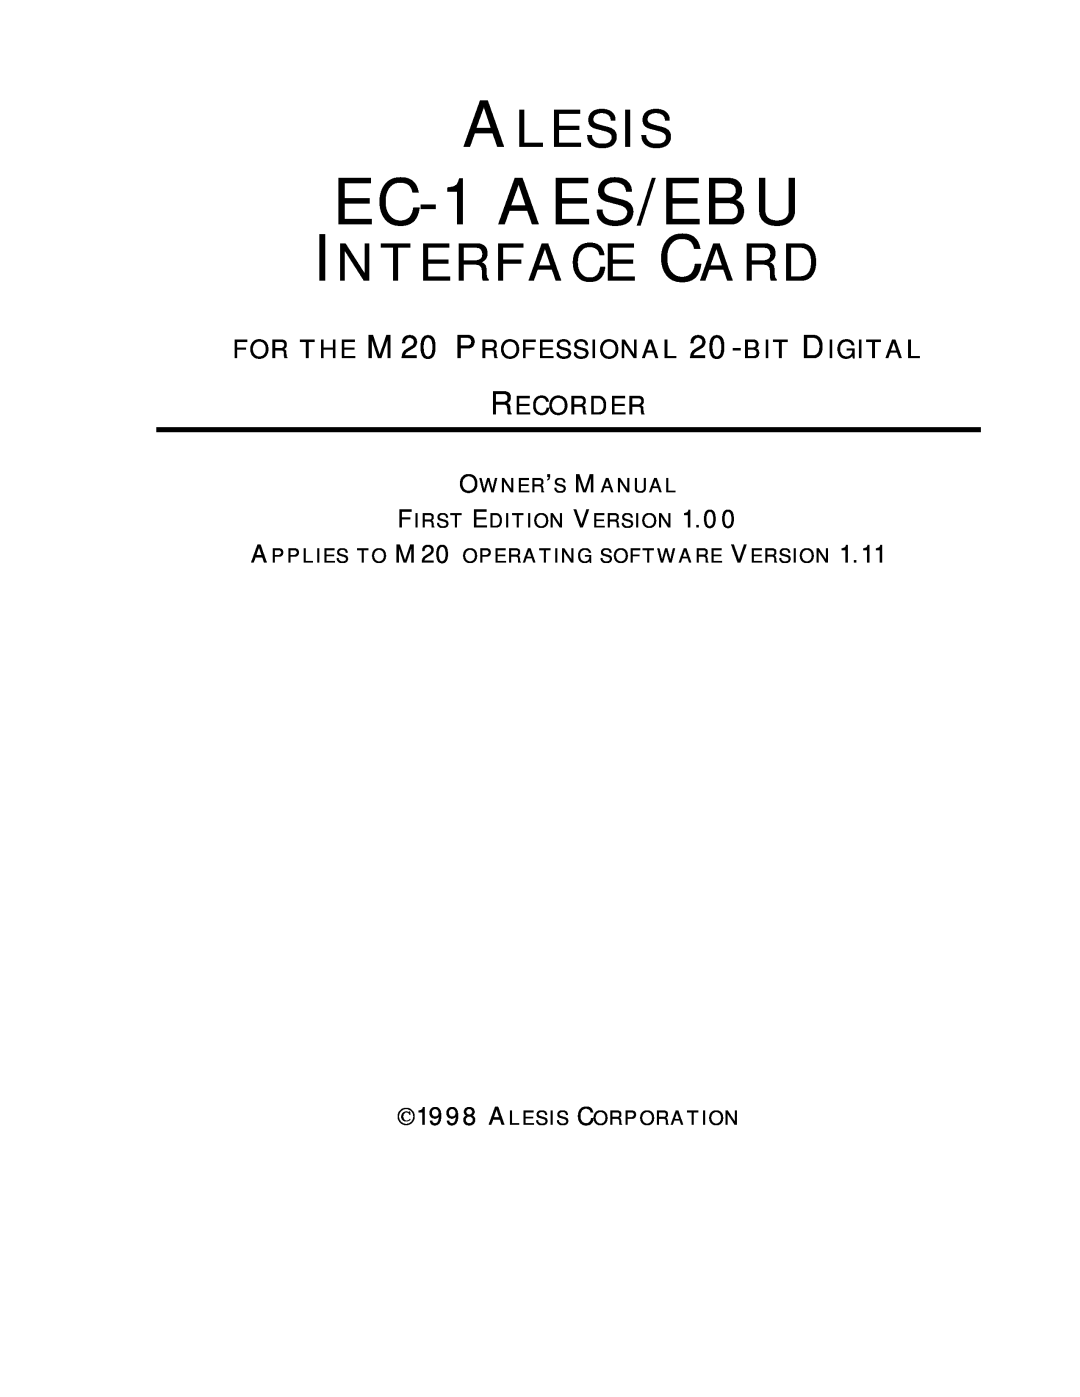 Alesis EC-1 A ES/EBU owner manual EC-1 AES/EBU, Alesis, Interface Card, FOR THE M20 PROFESSIONAL 20-BIT DIGITAL RECORDER 